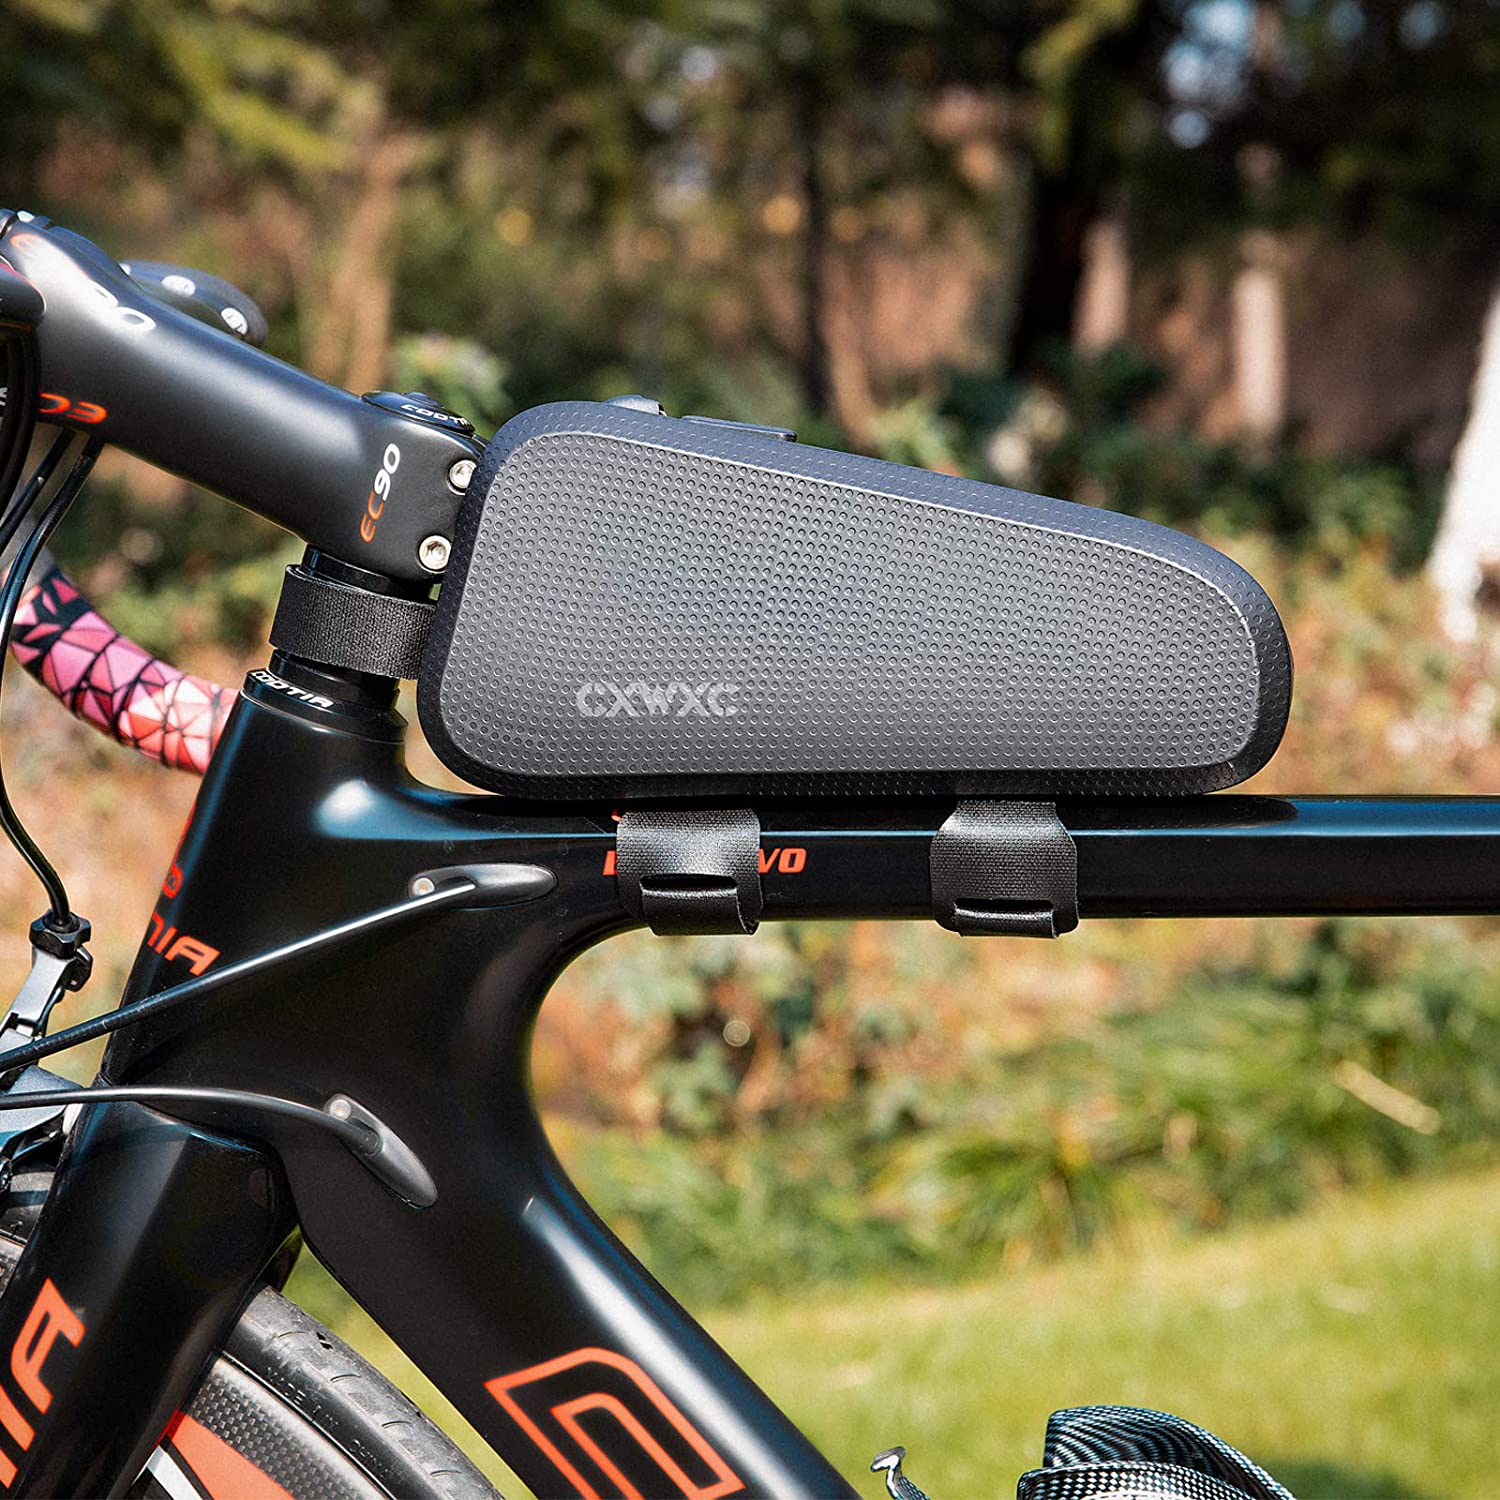 CXWXC Bike Accessories Top Tube Bag for Men Women - Mount Front Frame Bike Bags for Road/Mountain Bike - Waterproof Cycling Phone Pouch Bicy